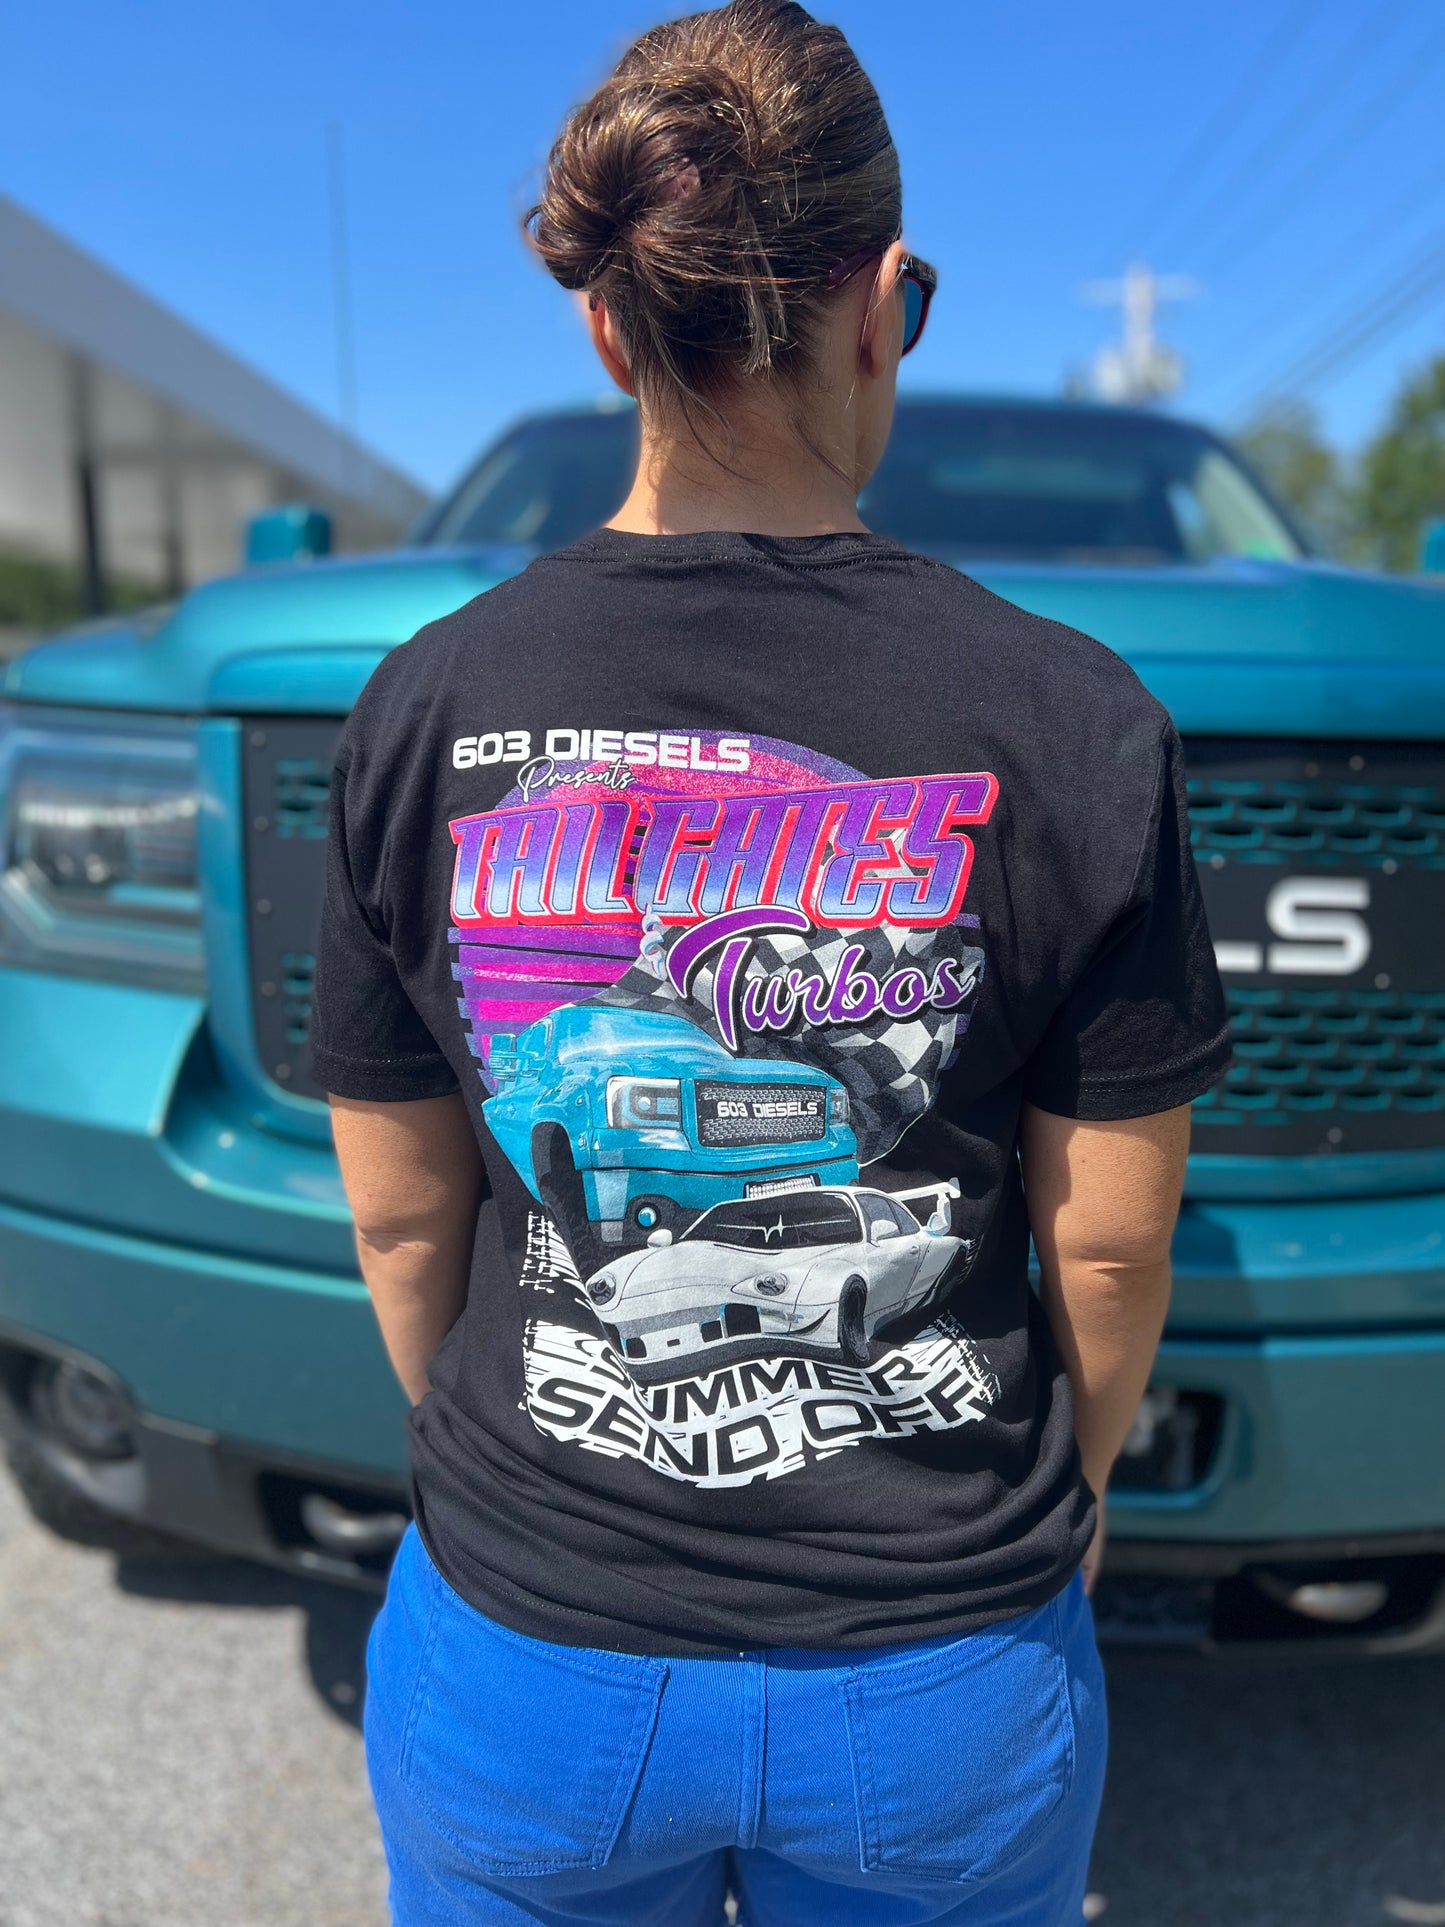 Tailgates & Turbos T-shirt